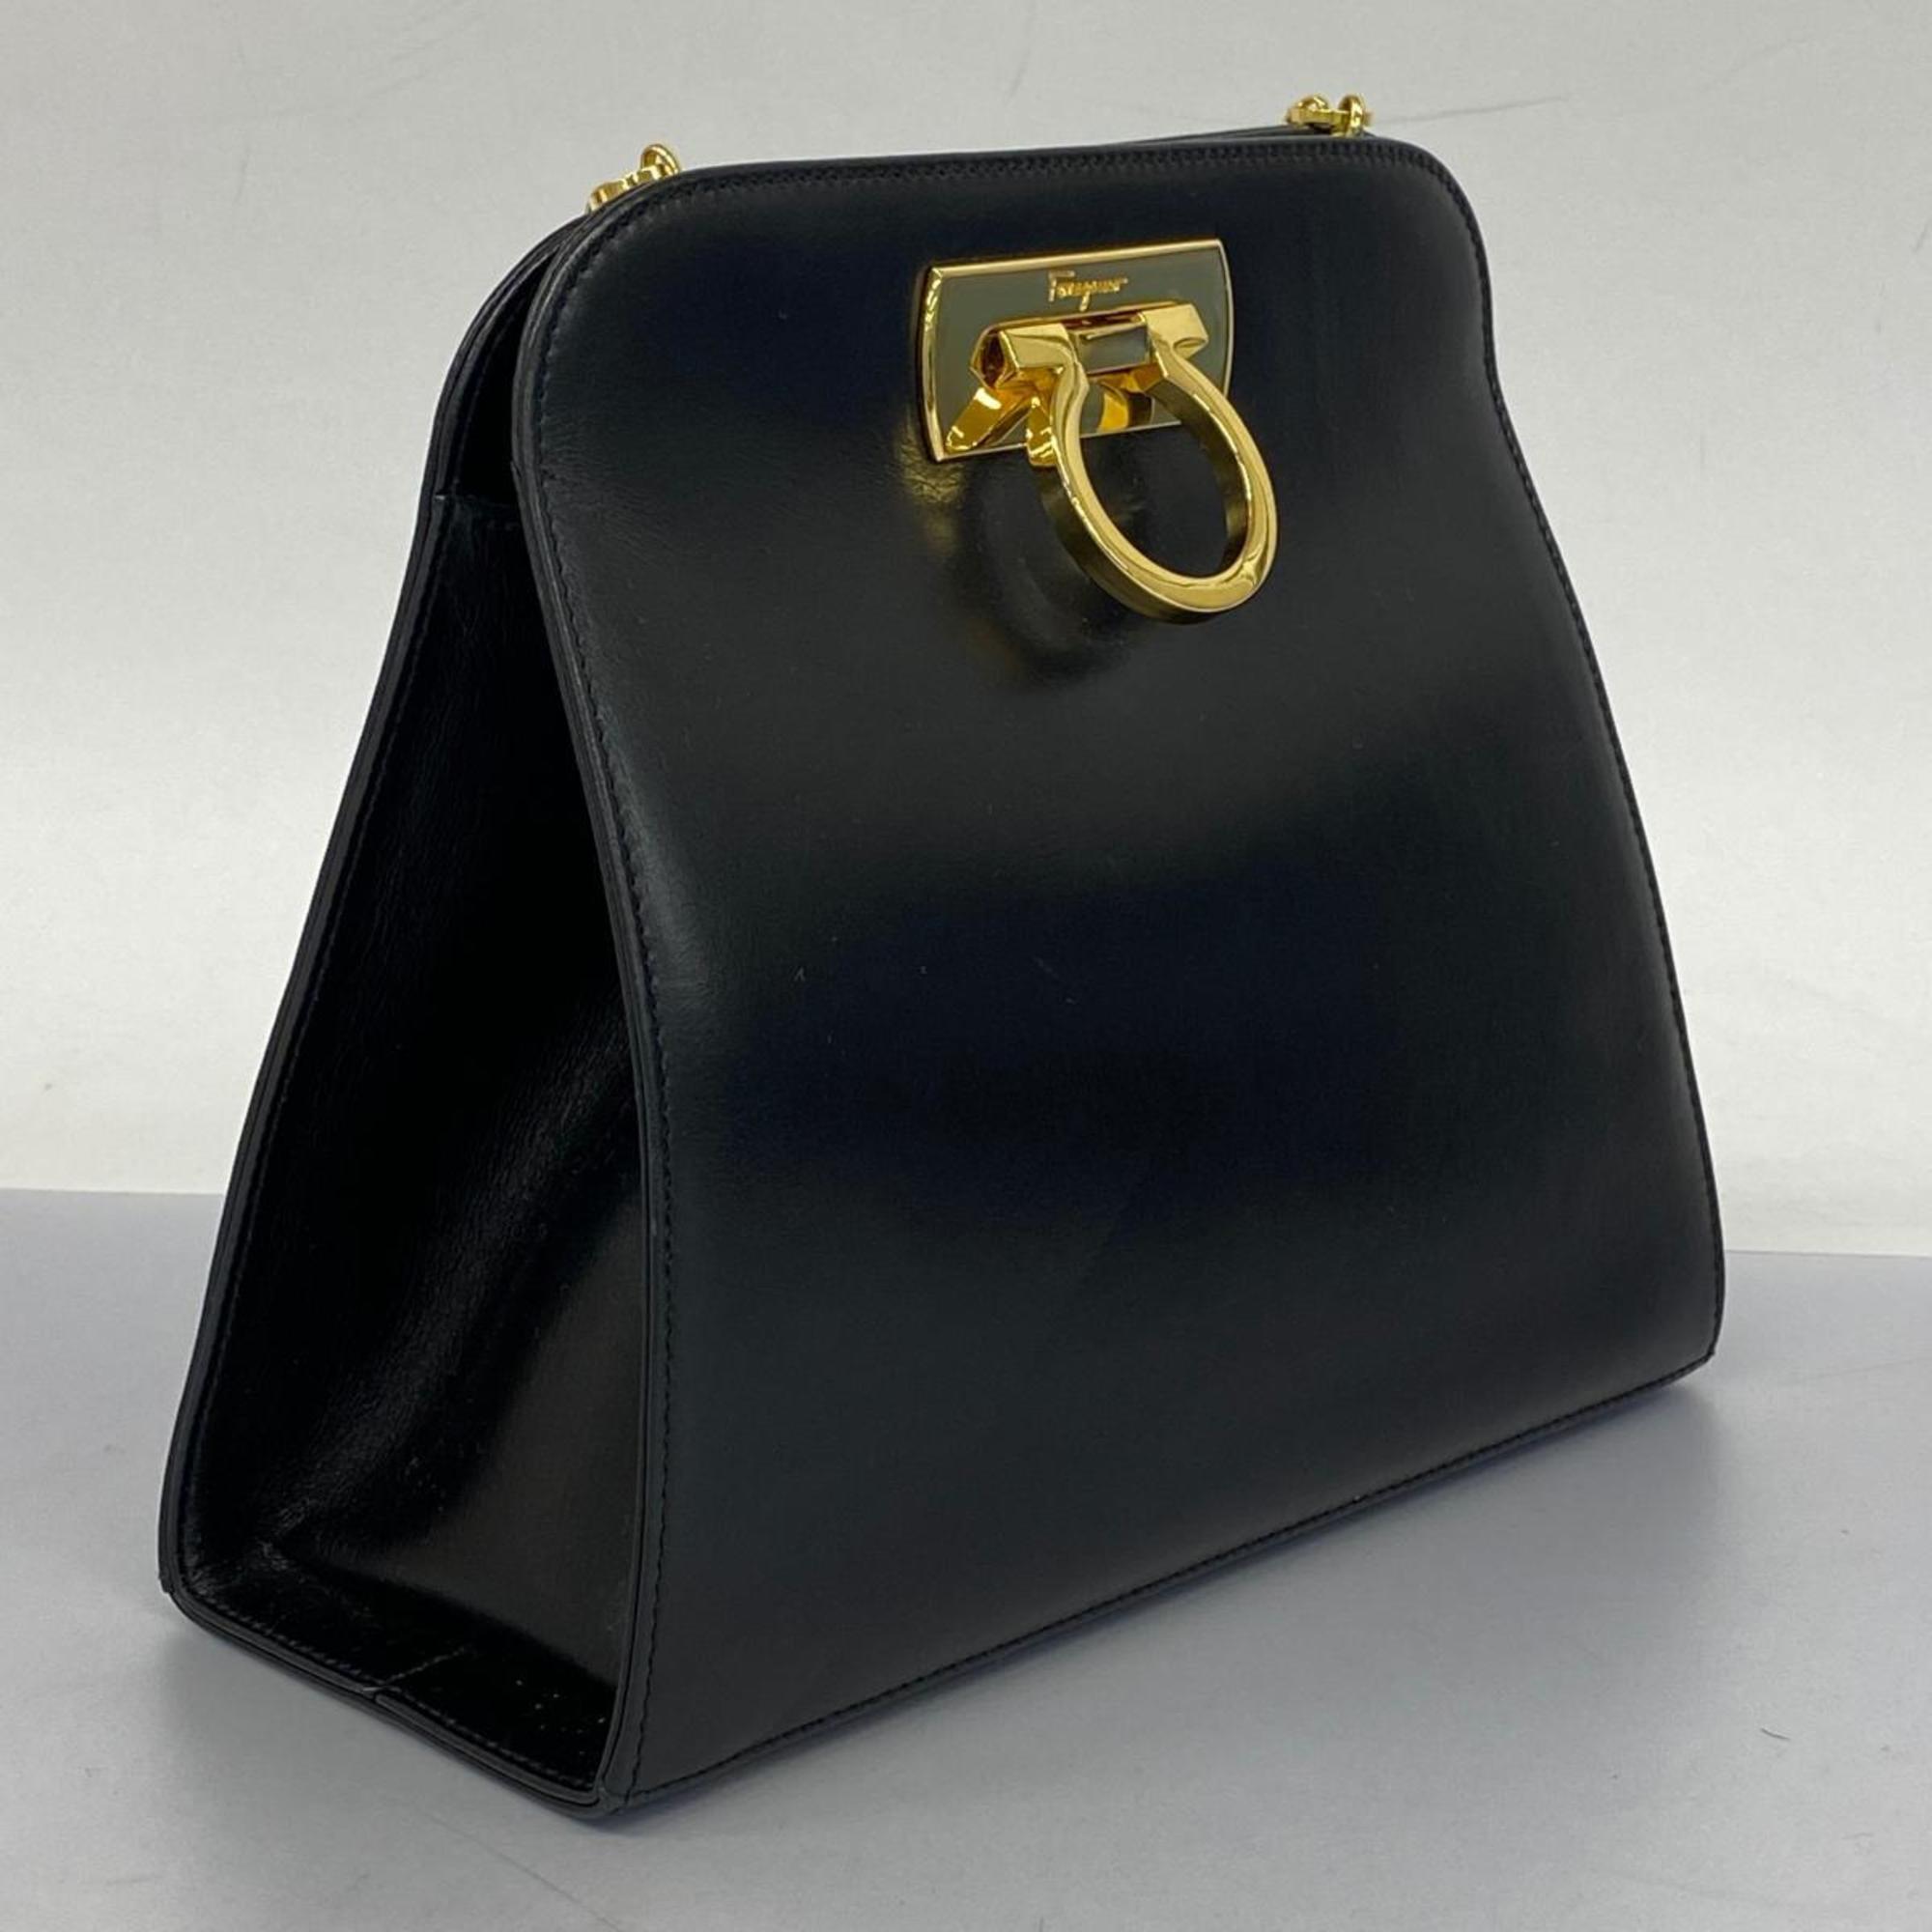 Salvatore Ferragamo Shoulder Bag Gancini Leather Black Women's